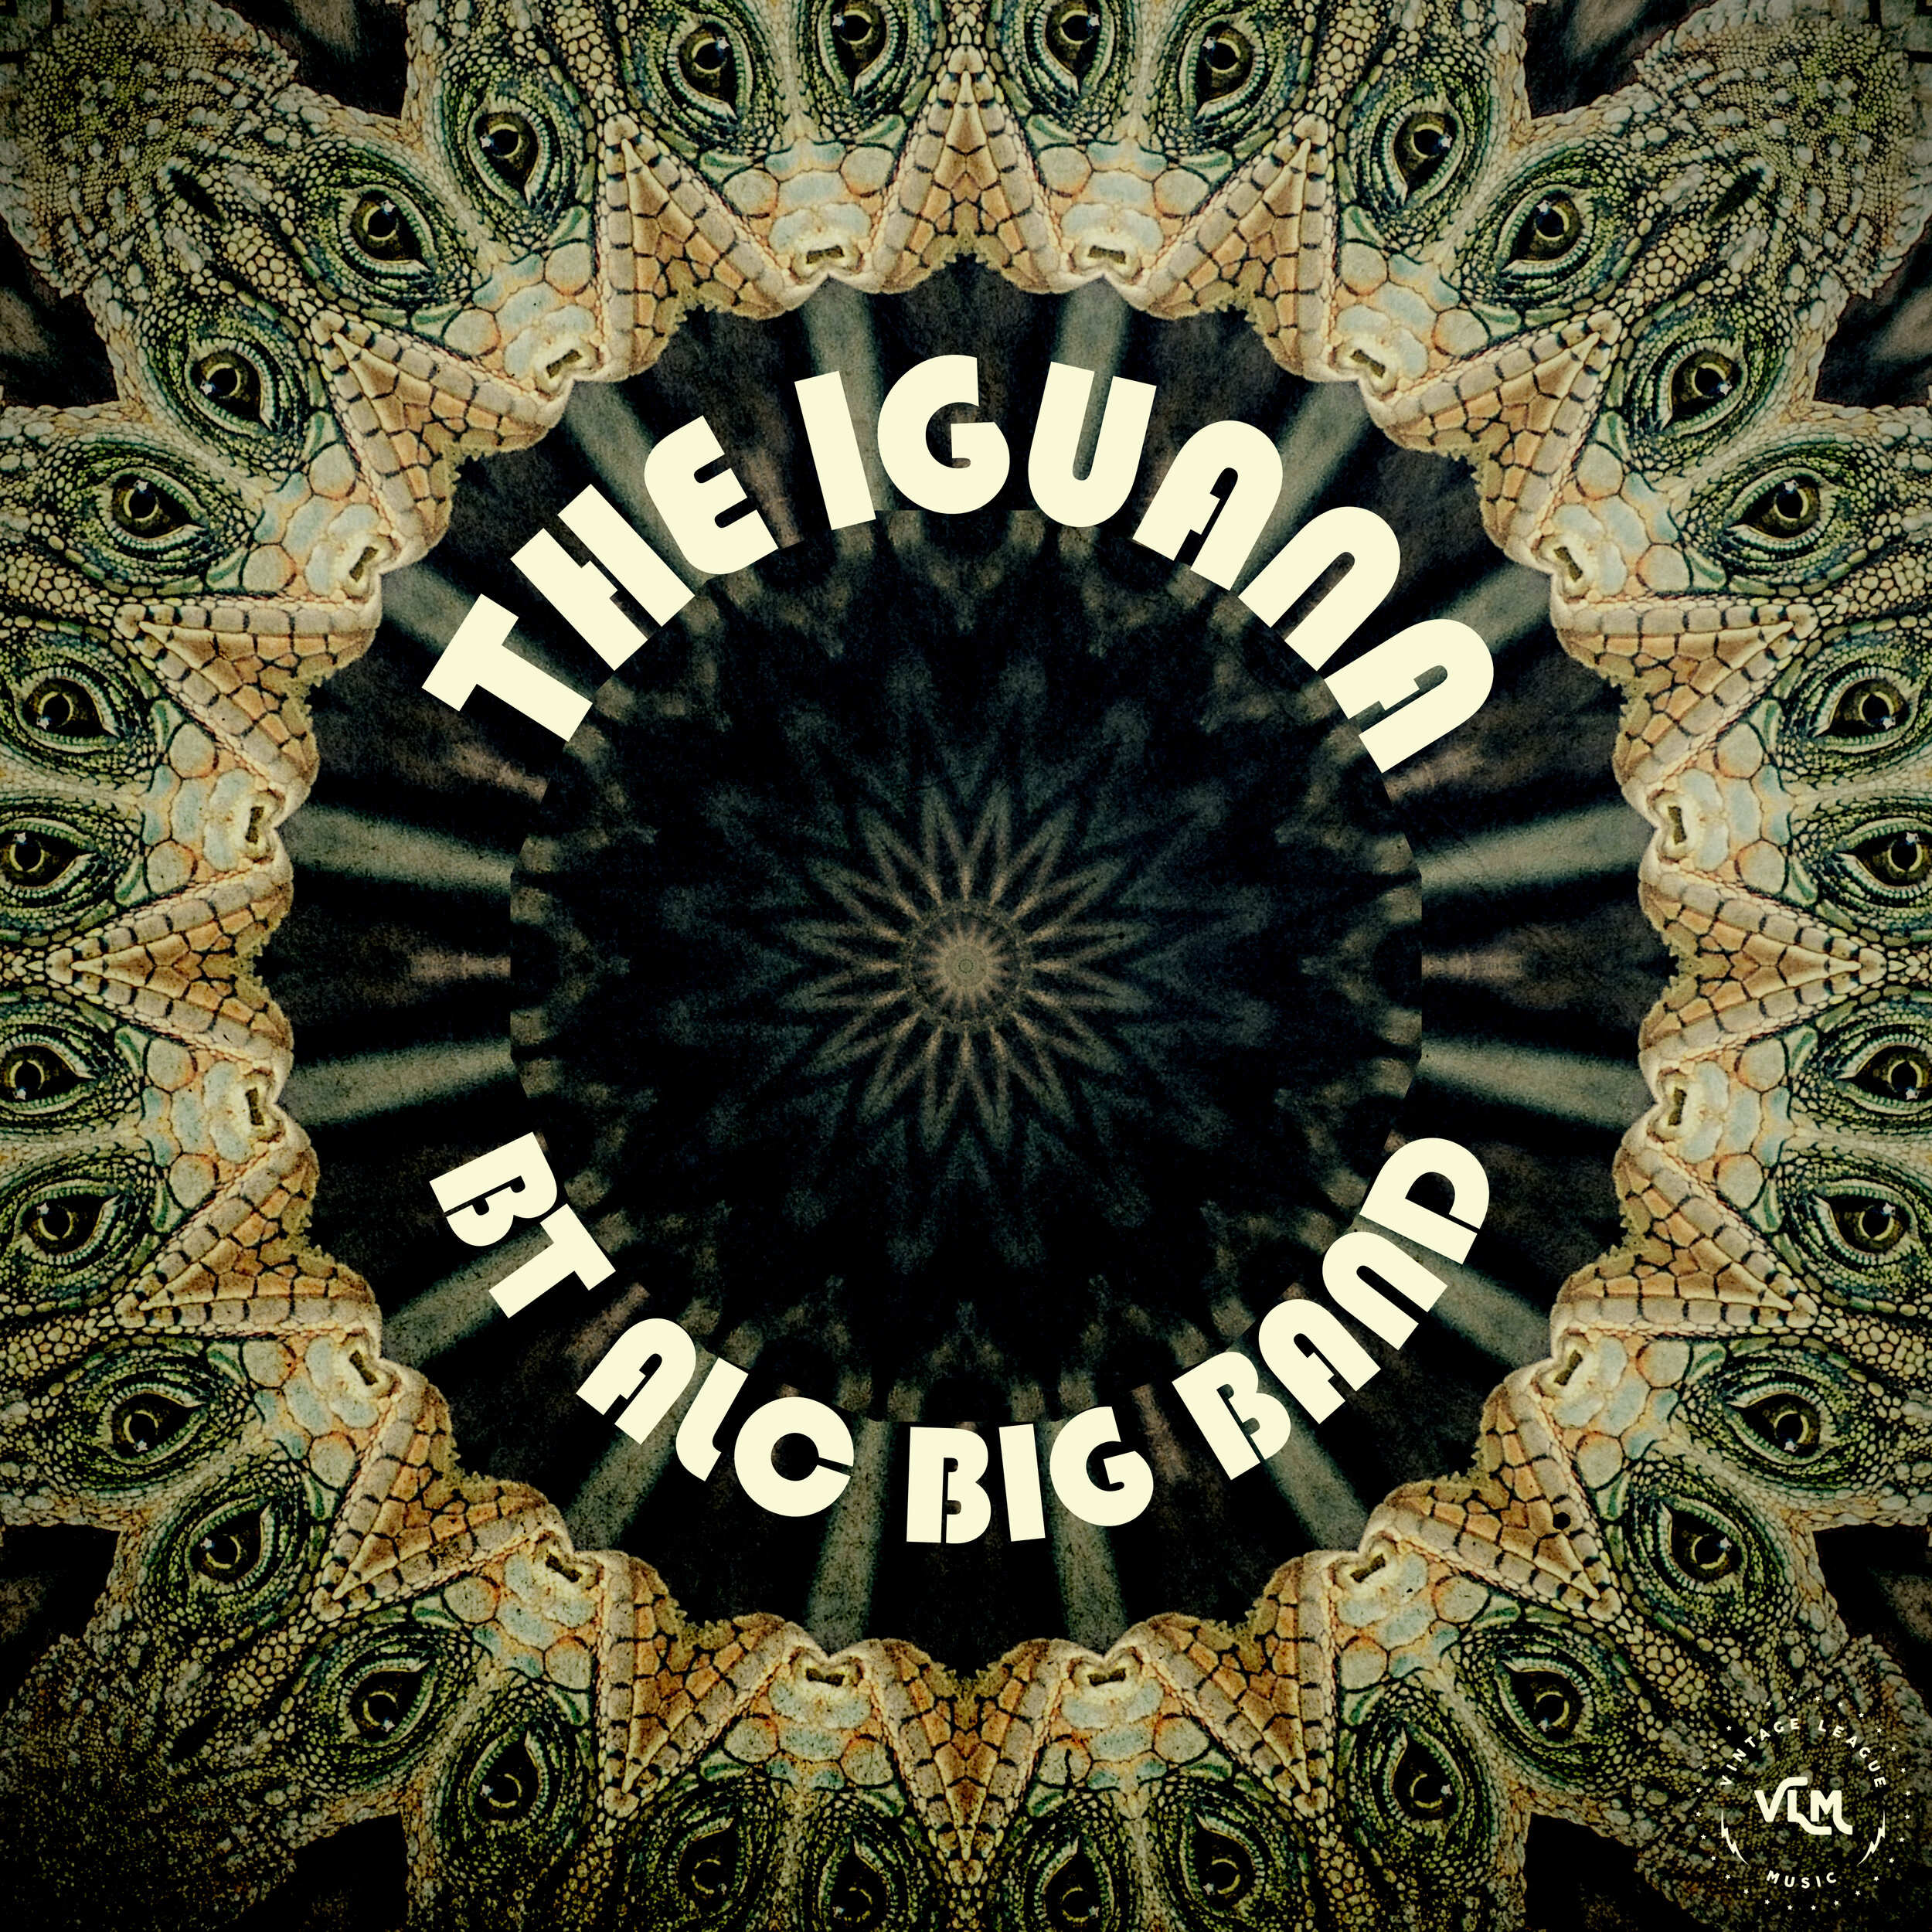 The Iguana big.jpg